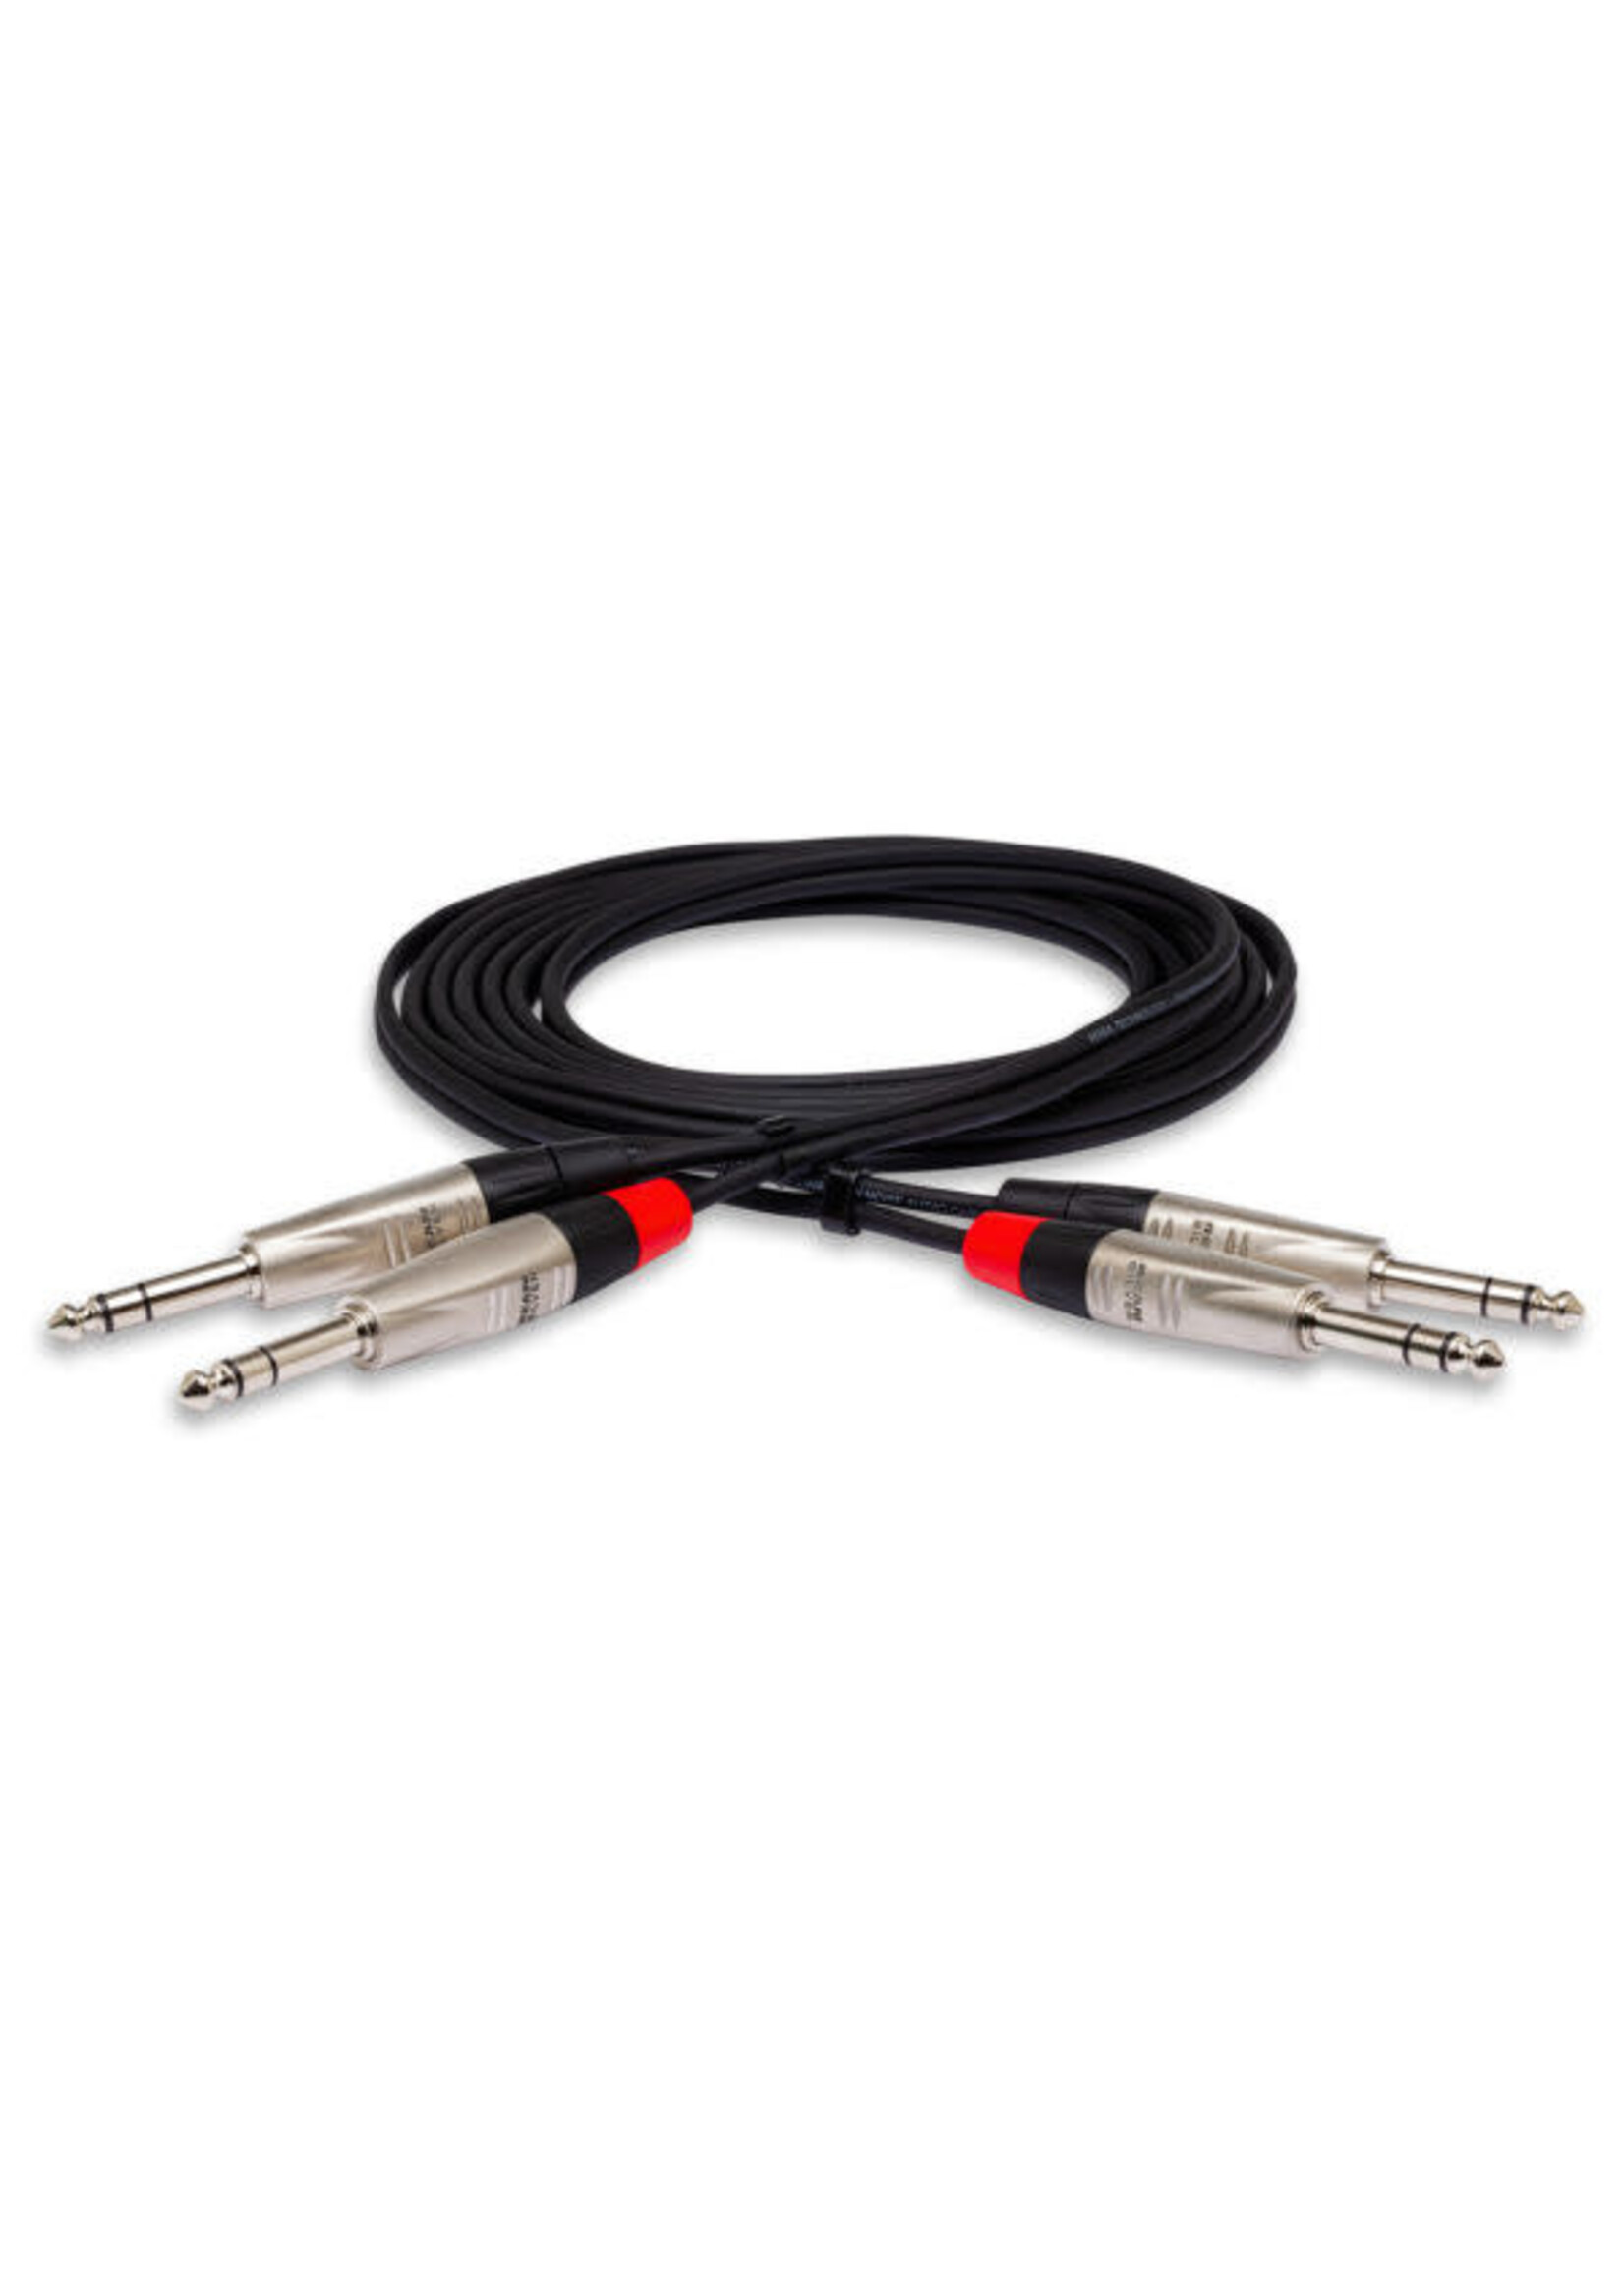 Hosa Hosa HSS-005X2 Pro Dual Cable 1/4"" TRS to Same - 5ft